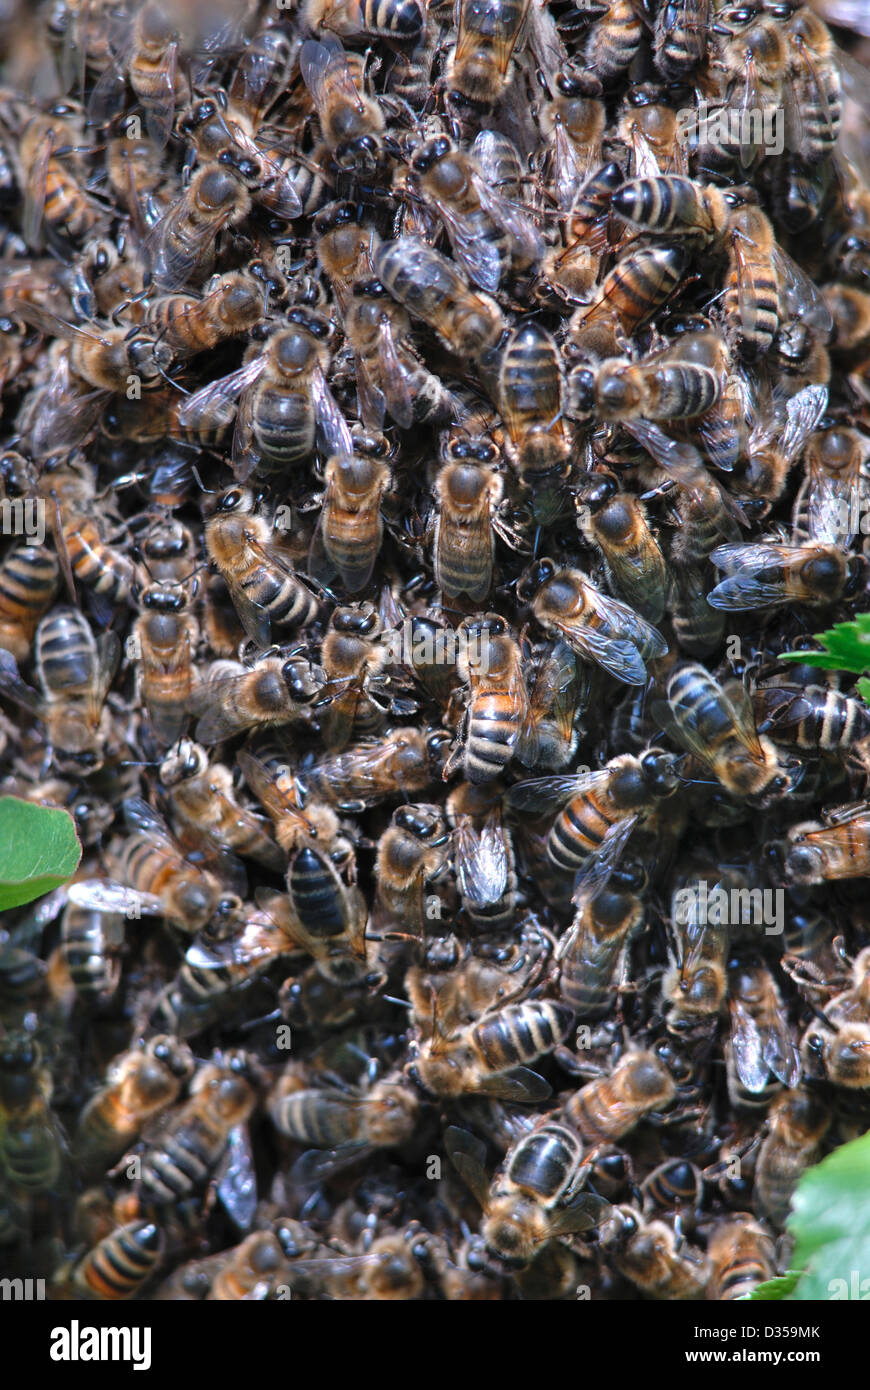 Swarm of honey bees. Dorset, UK May 2007 Stock Photo